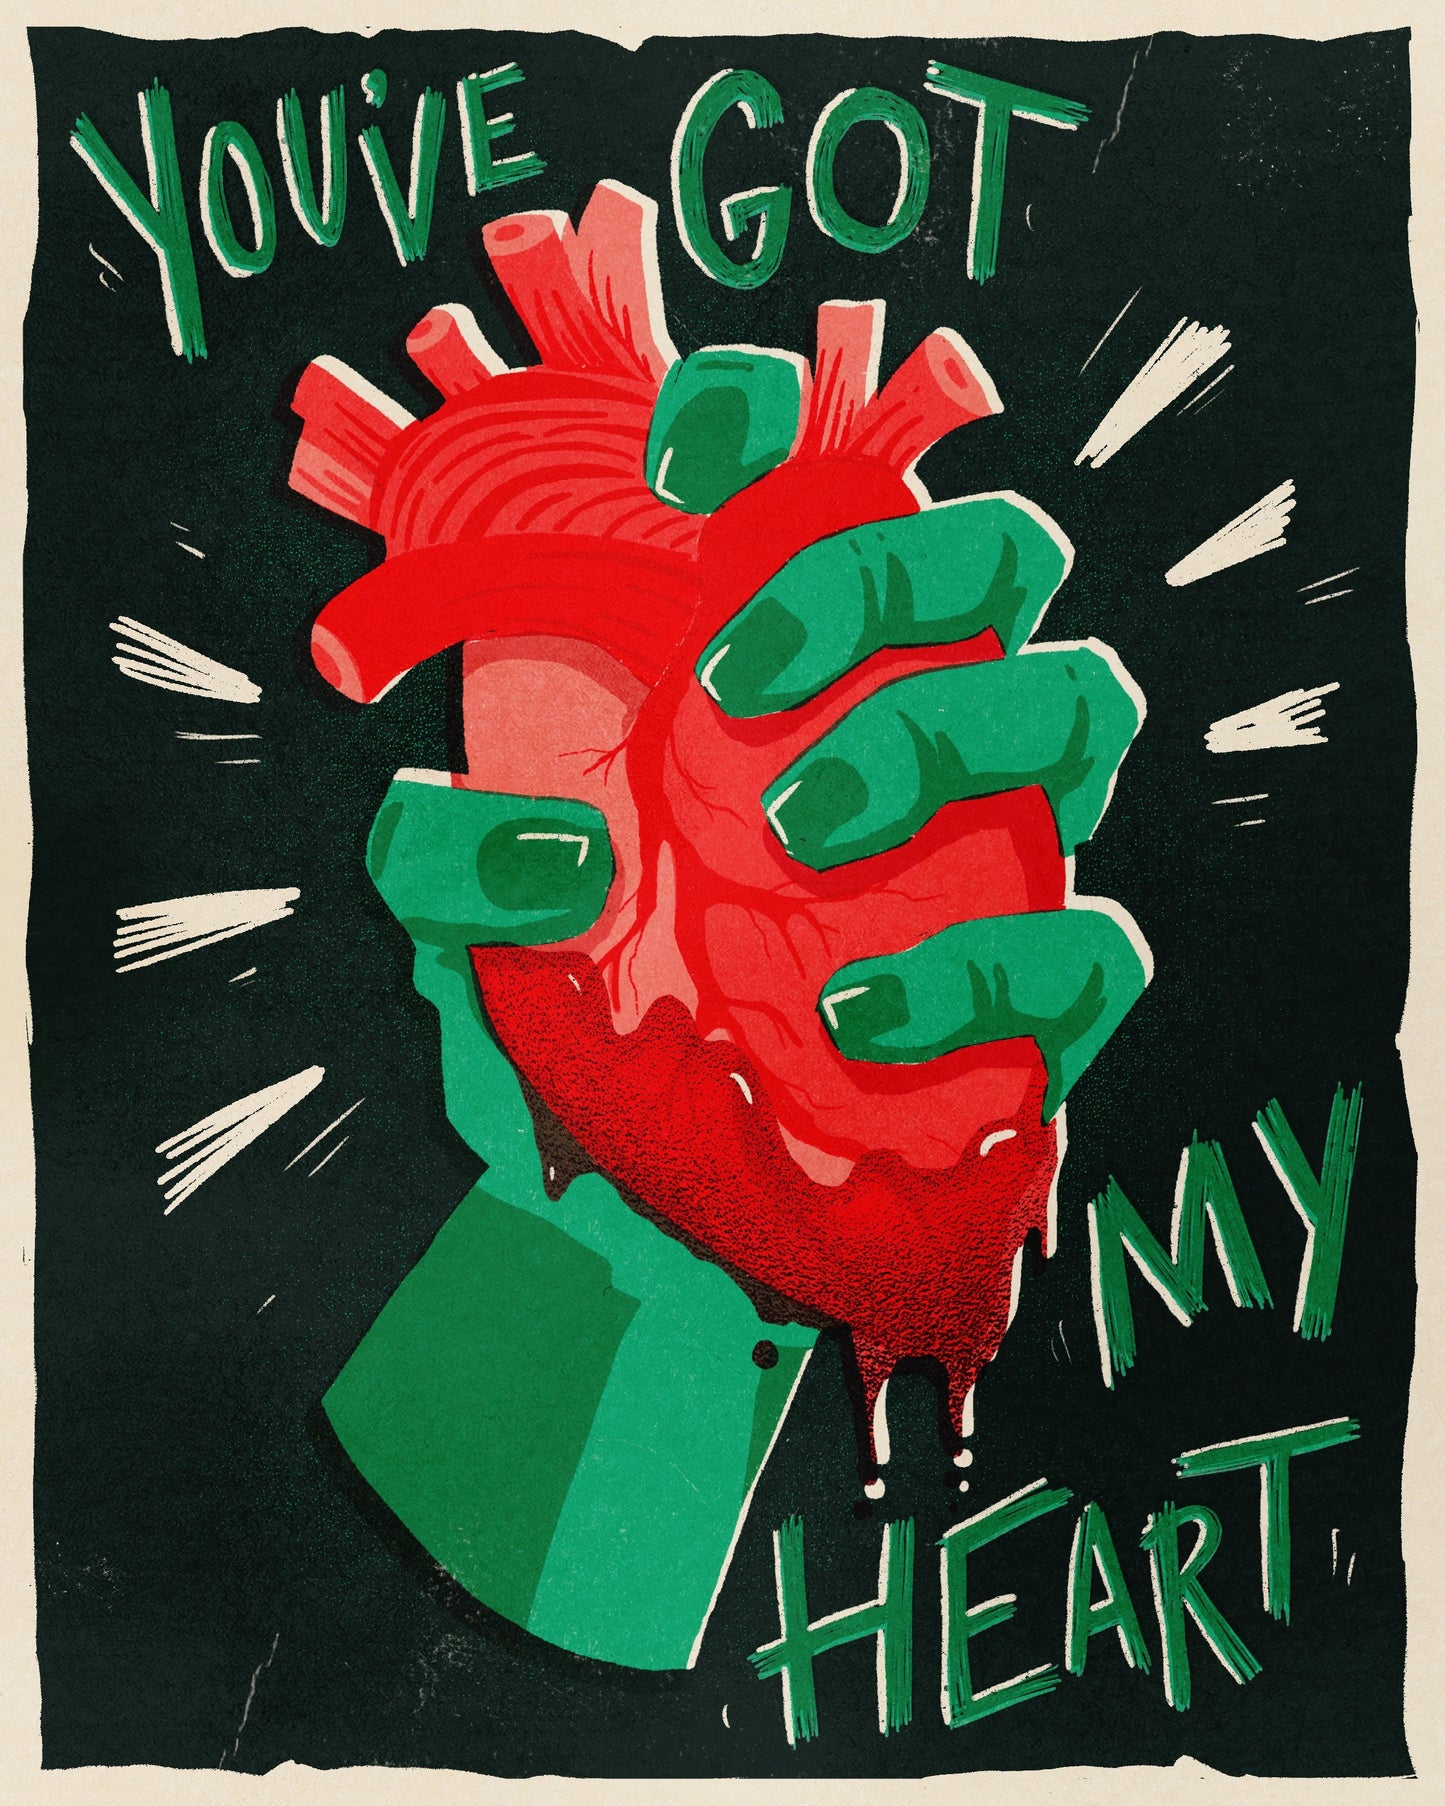 "You've got my heart" Print